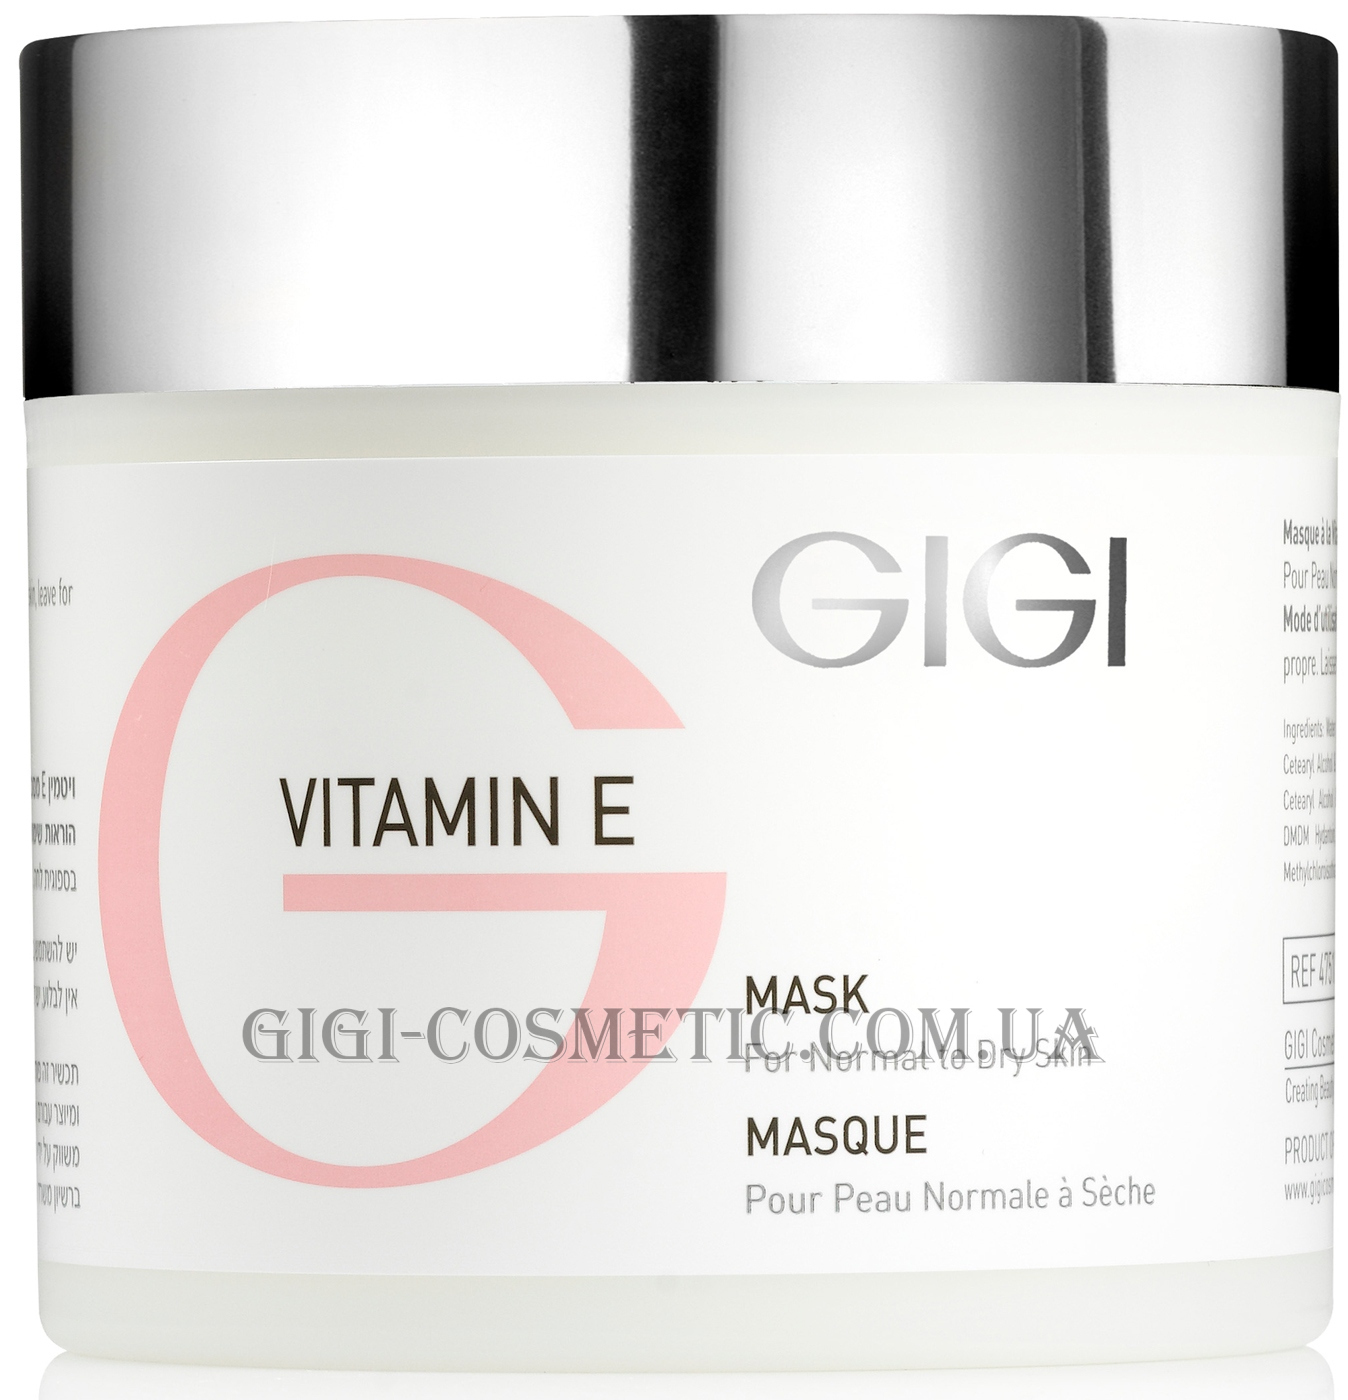 GIGI Vitamin E Mask For Normal To Dry Skin - Маска для нормальной и сухой кожи